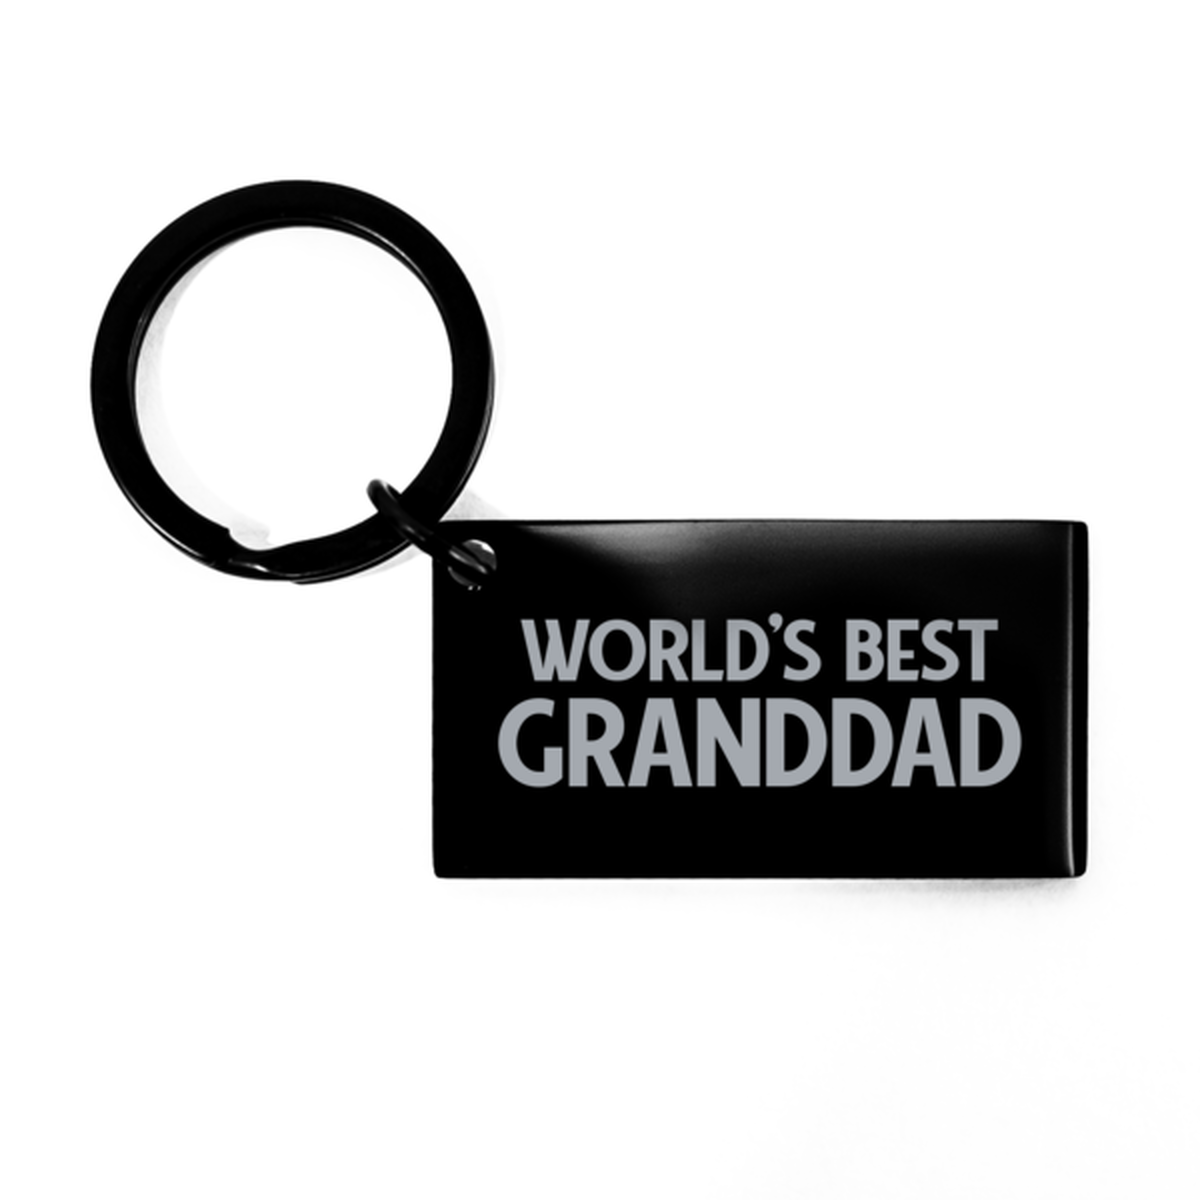 Worlds Best Granddad Gifts, Funny Black Engraved Keychain For Granddad, Birthday Presents For Men